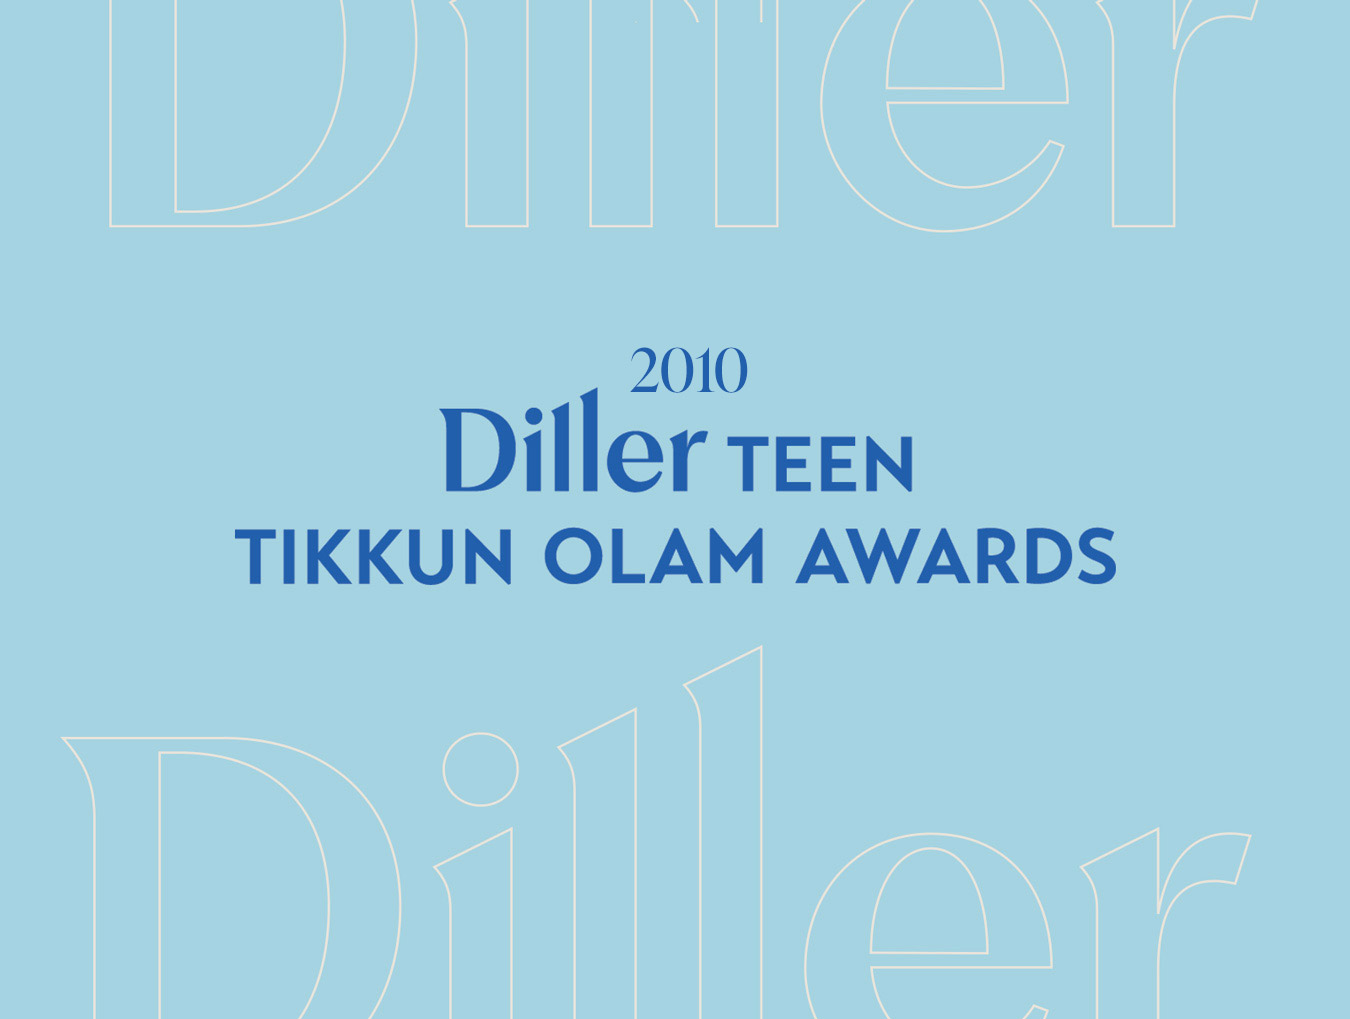 2010 Diller Teen Tikkun Olam Awards video